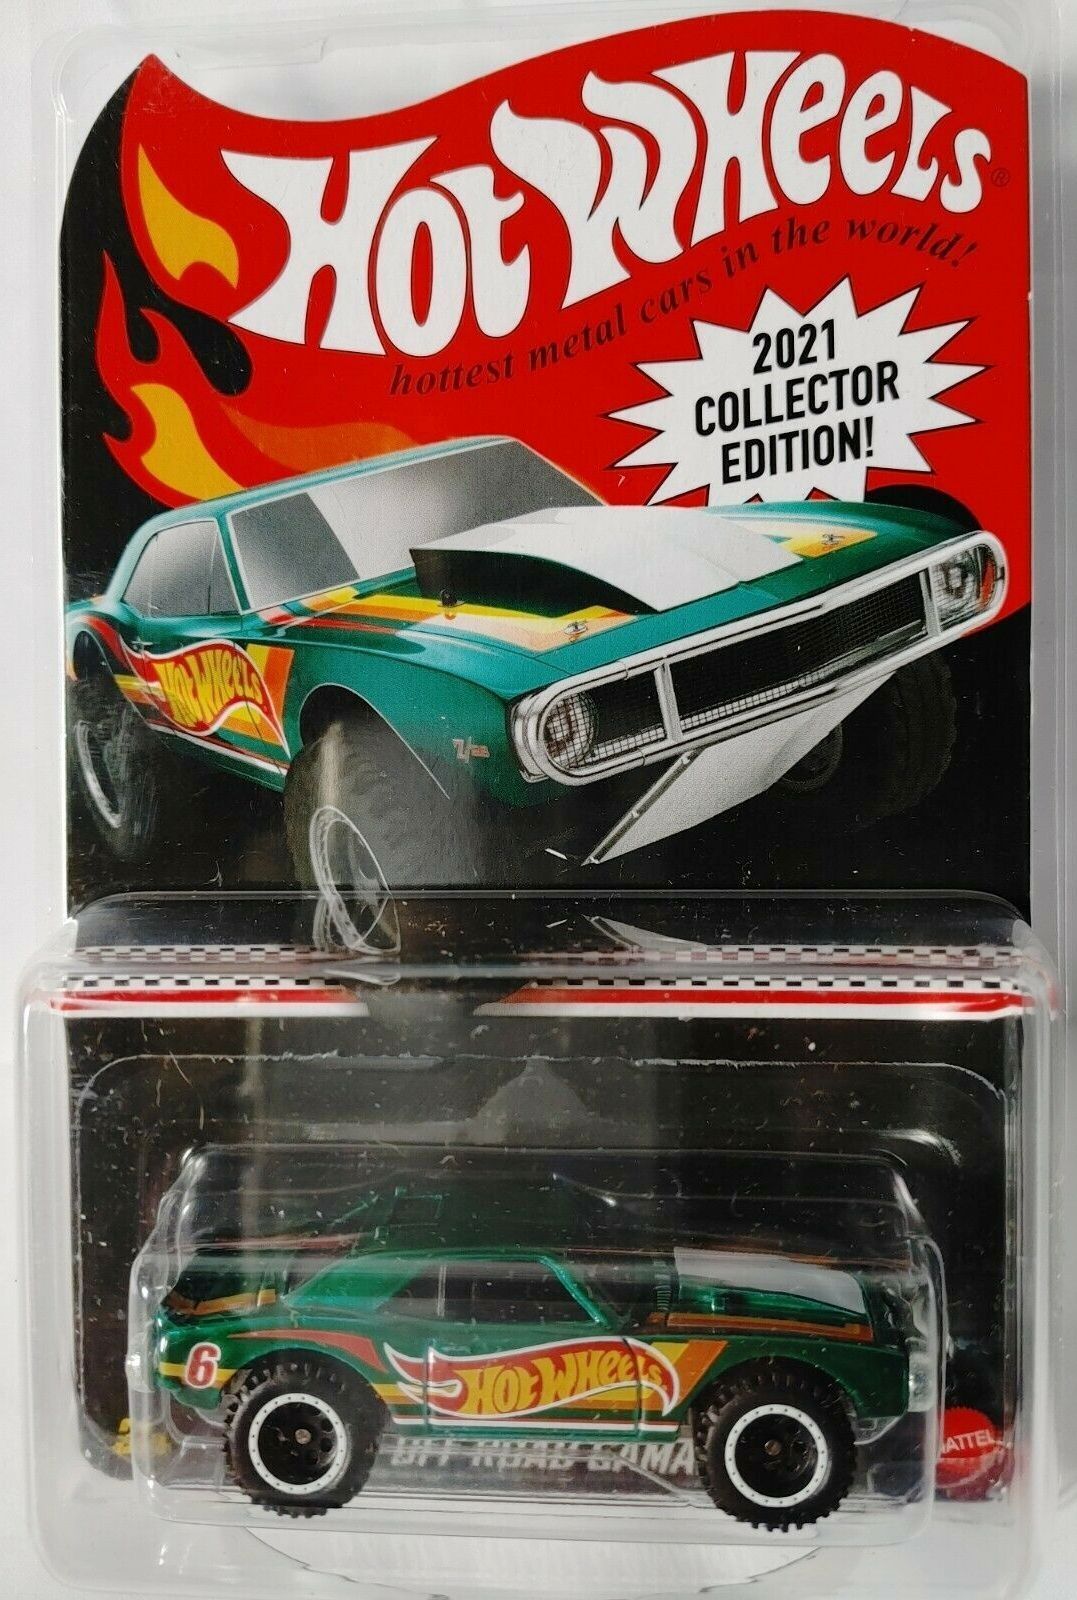 '67 Off Road Camaro - 2021 Collector Edition - Carded